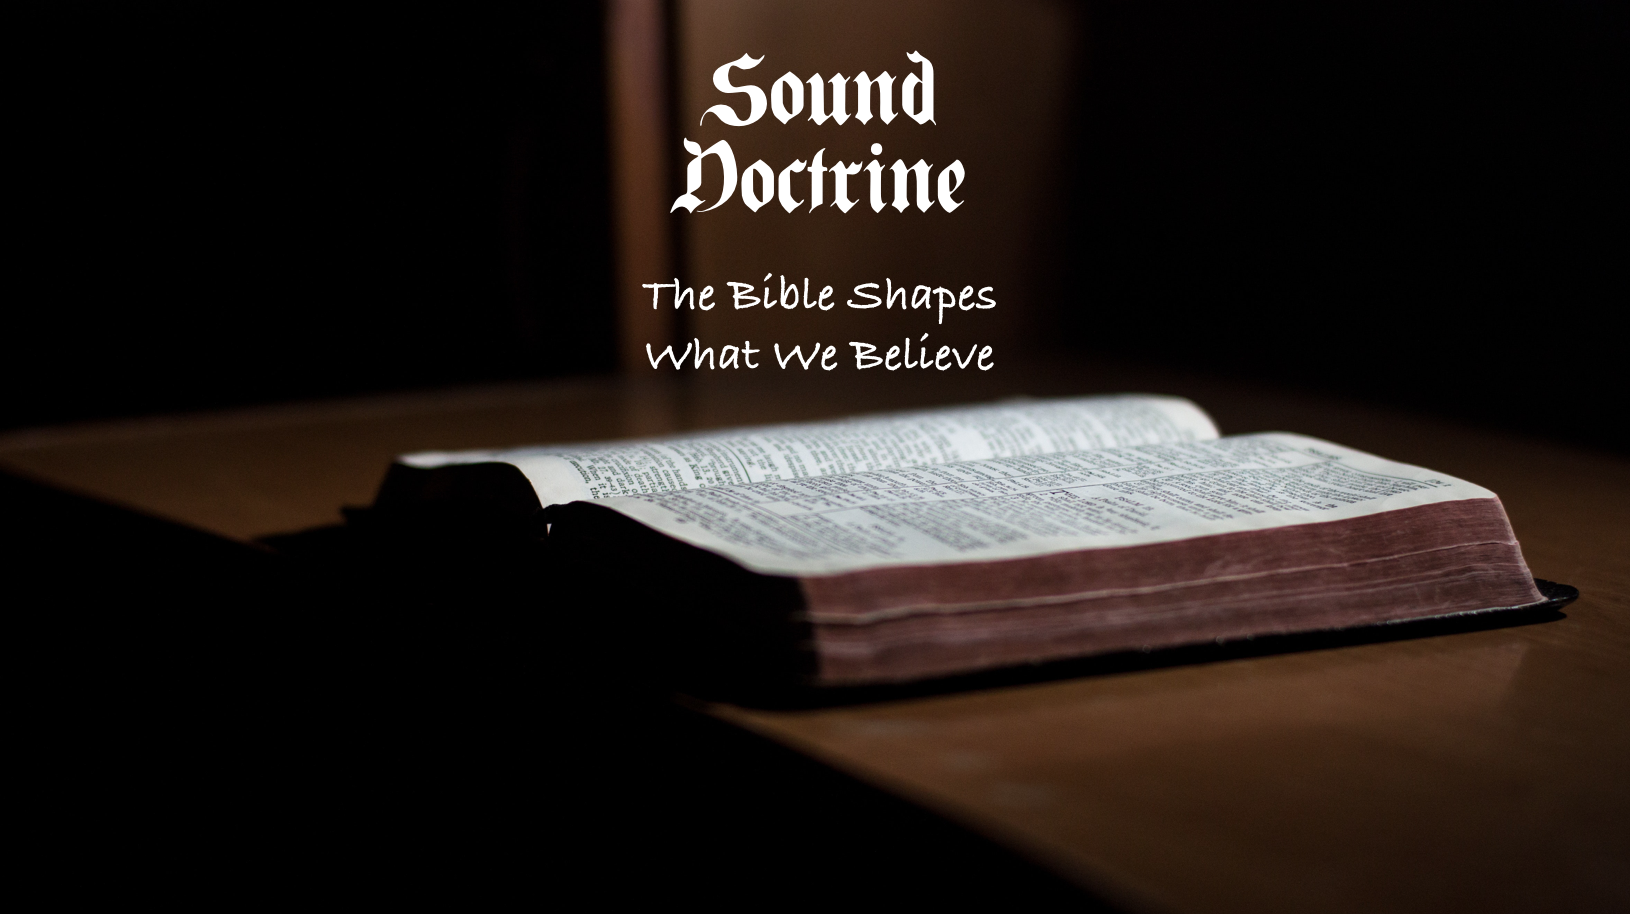 Doctrine: The Kingdom